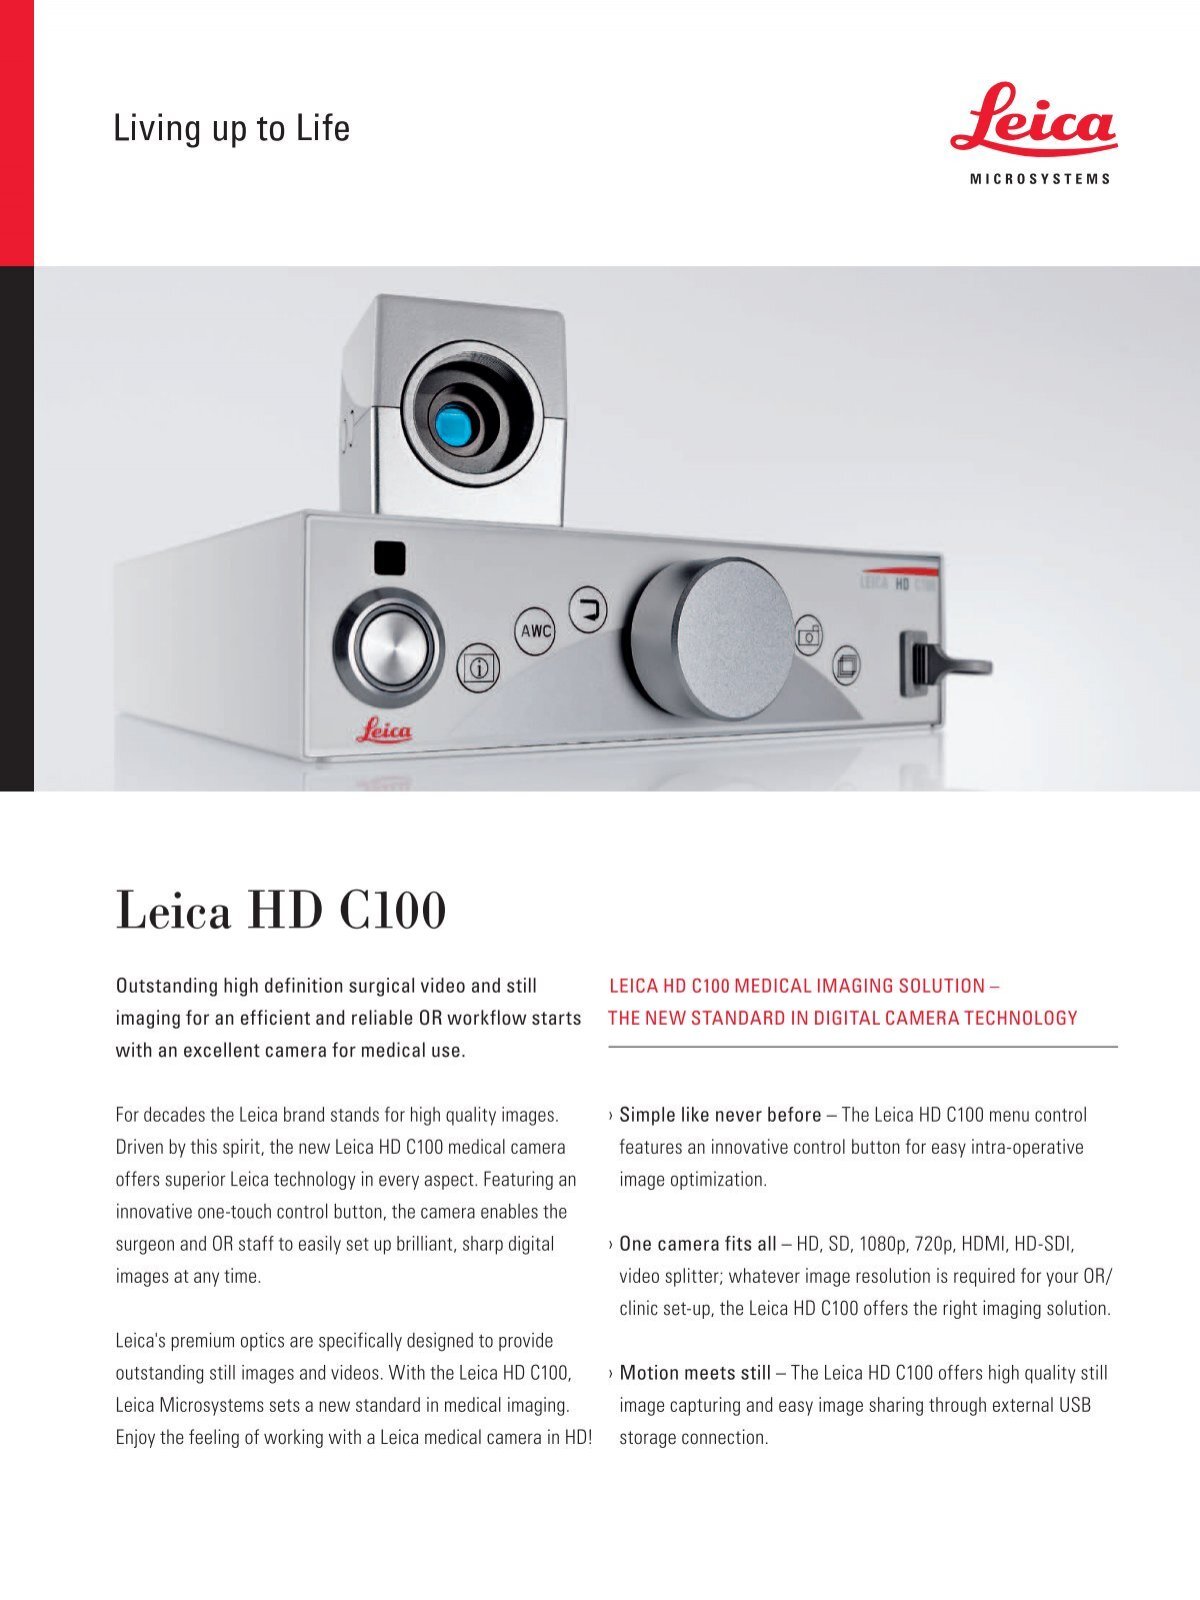 Leica Hd C100 Leica Microsystems